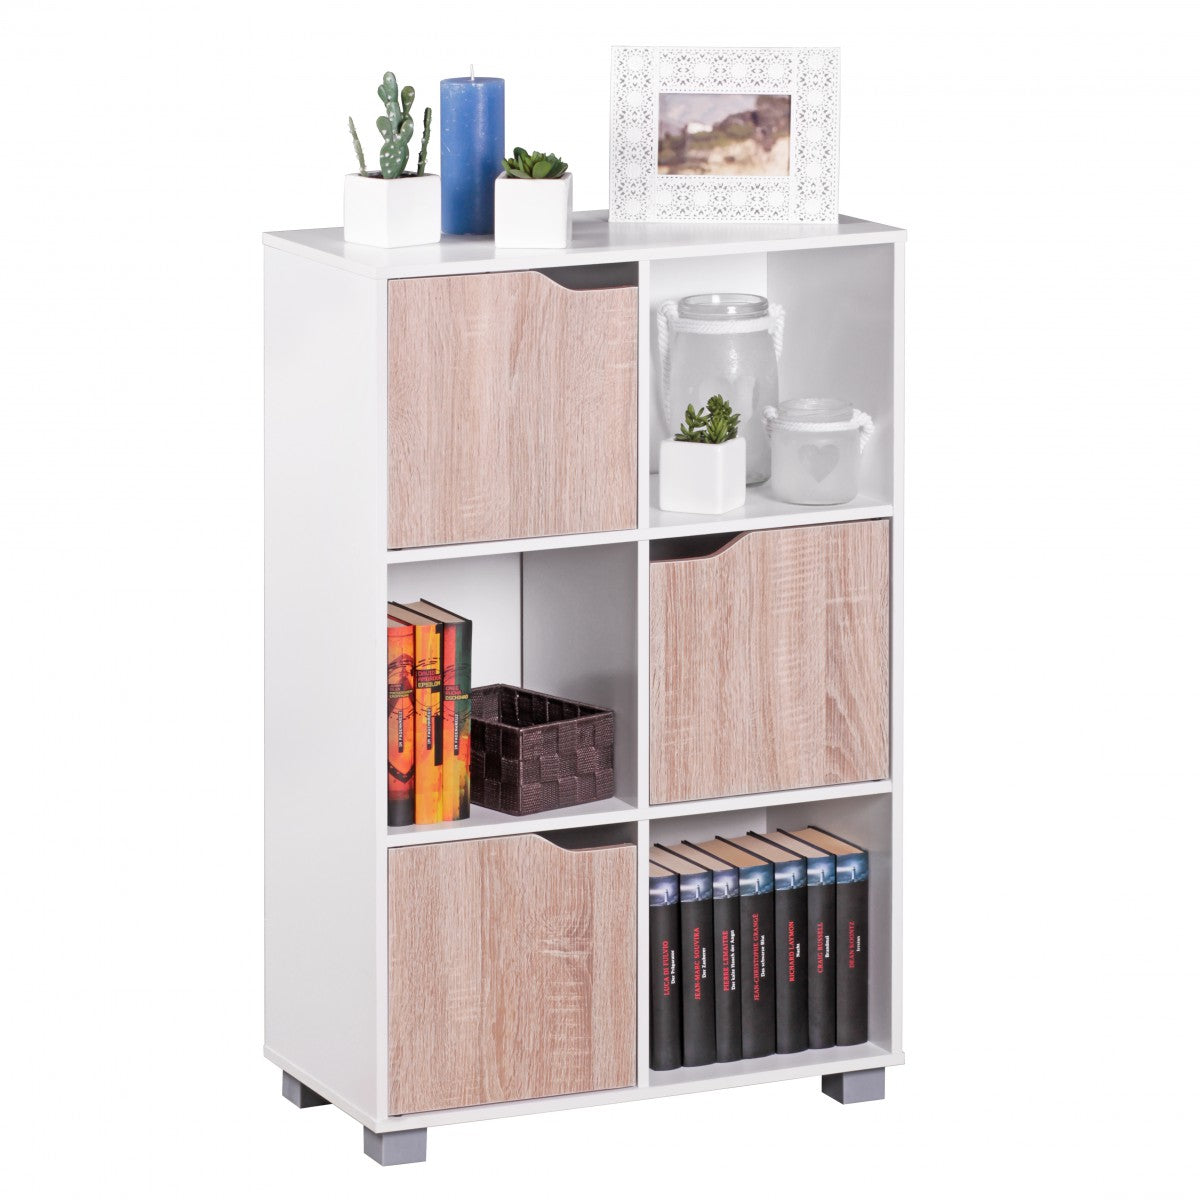 Nancy's Ambridge Shelving unit - Bookcase - Storage cabinet - Oak - White - Design - Bookshelf